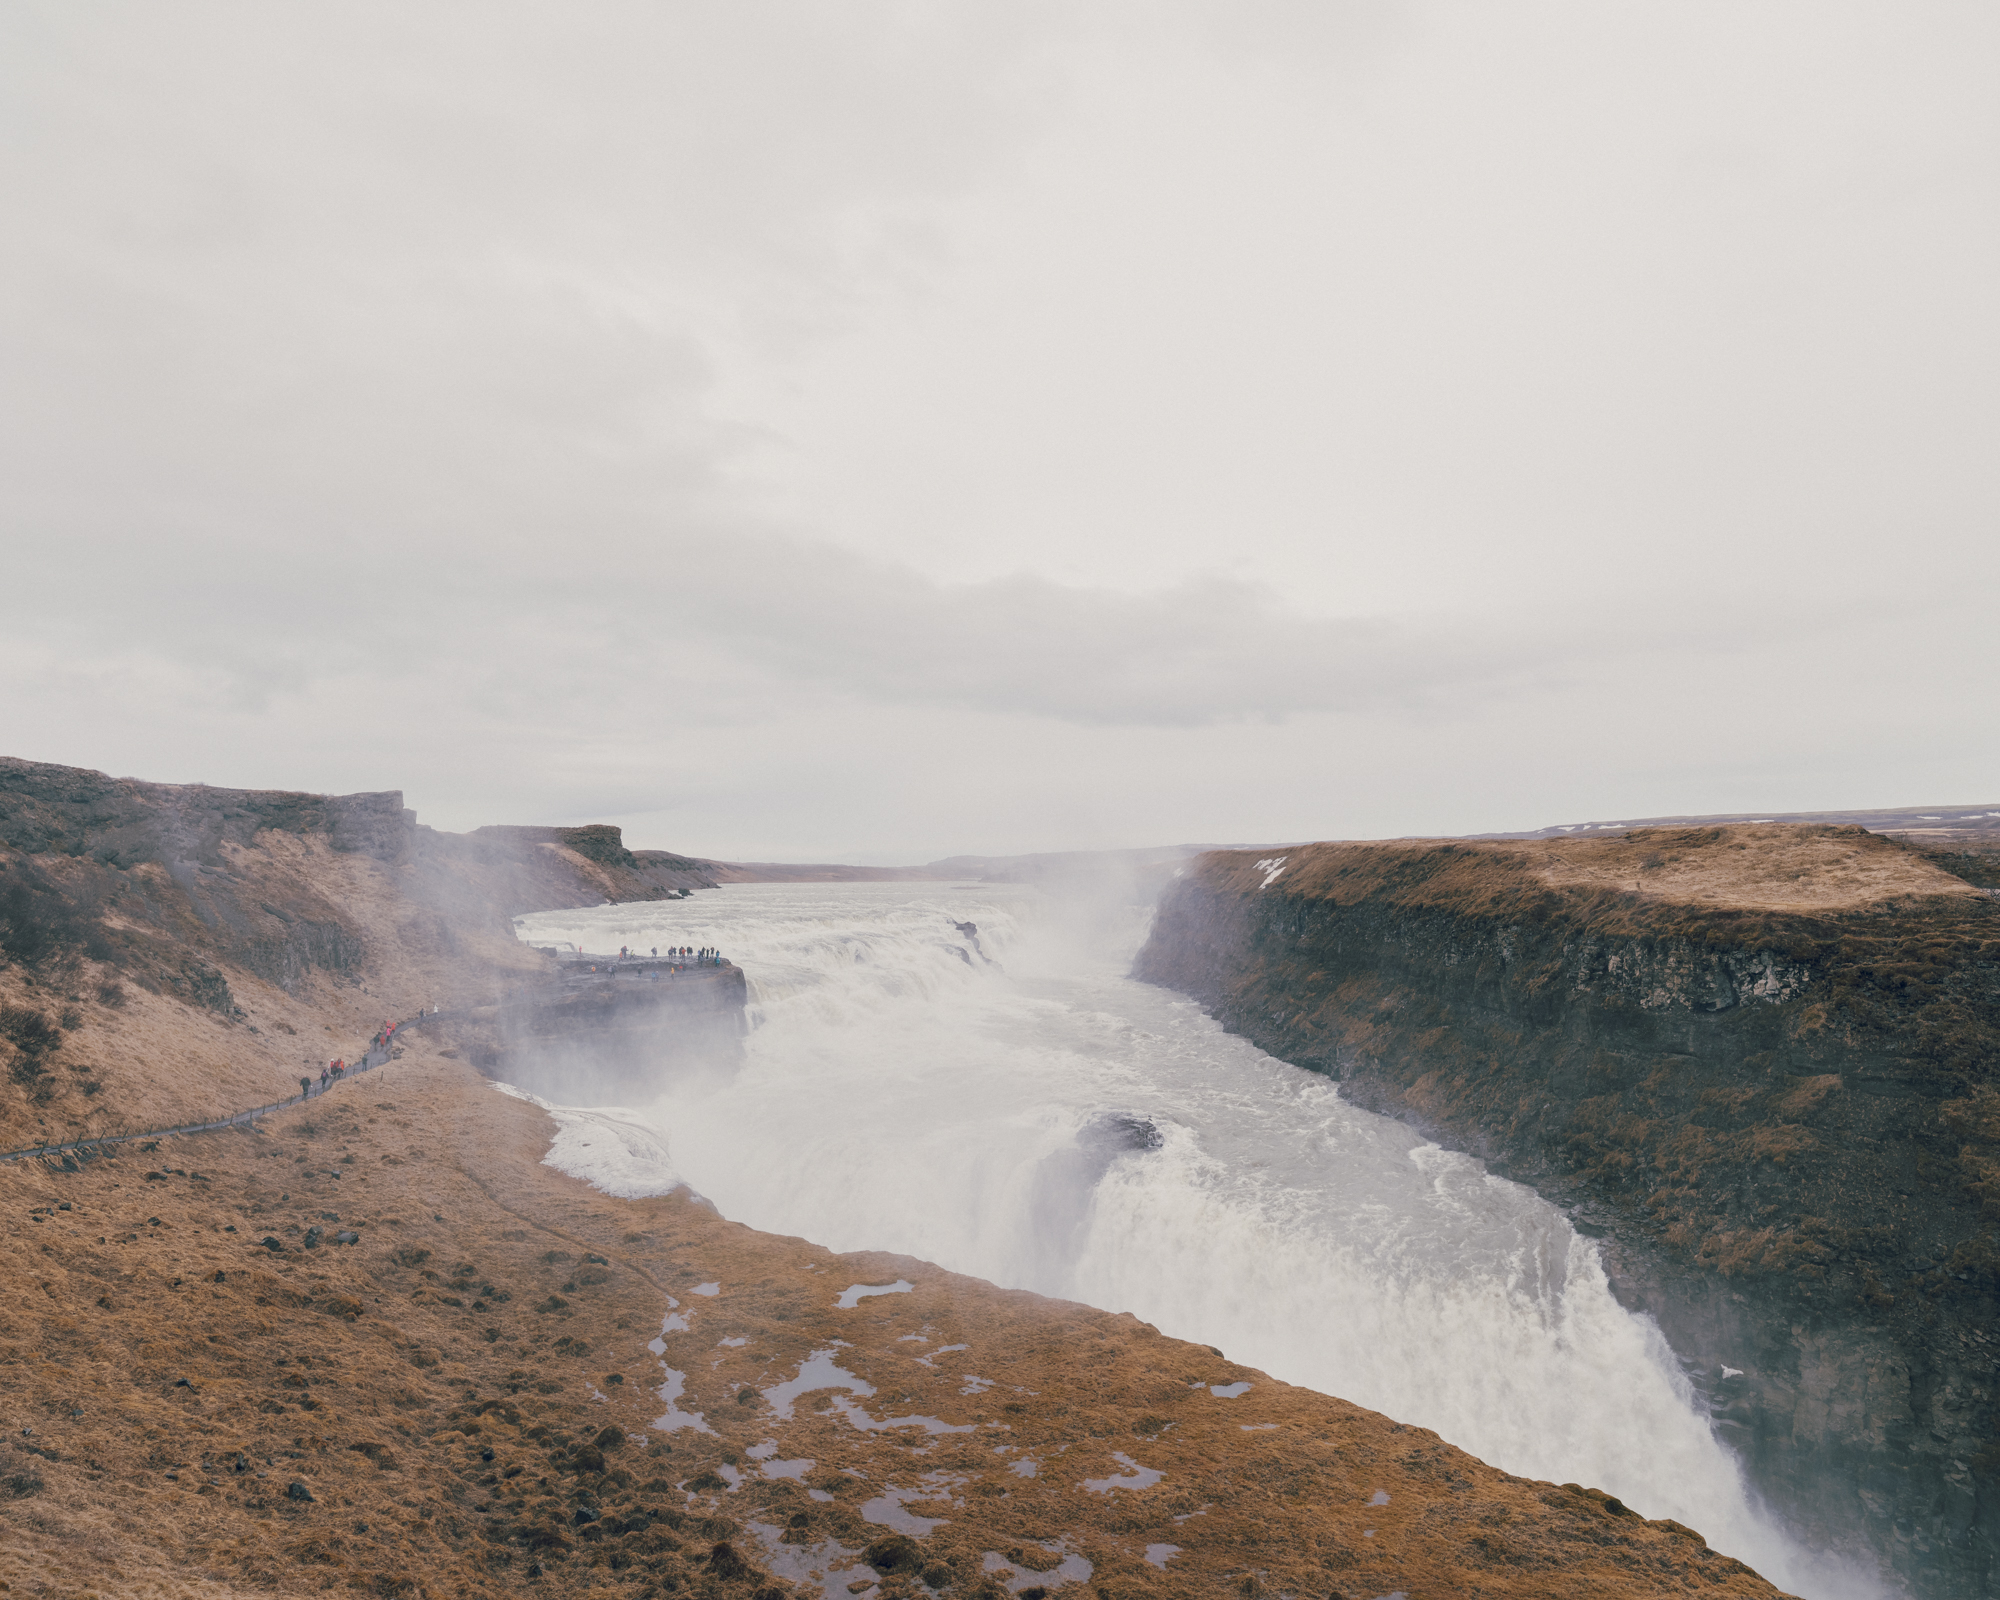 Gullfoss Waterfall: Breathtaking cascade in Iceland's Golden Circle